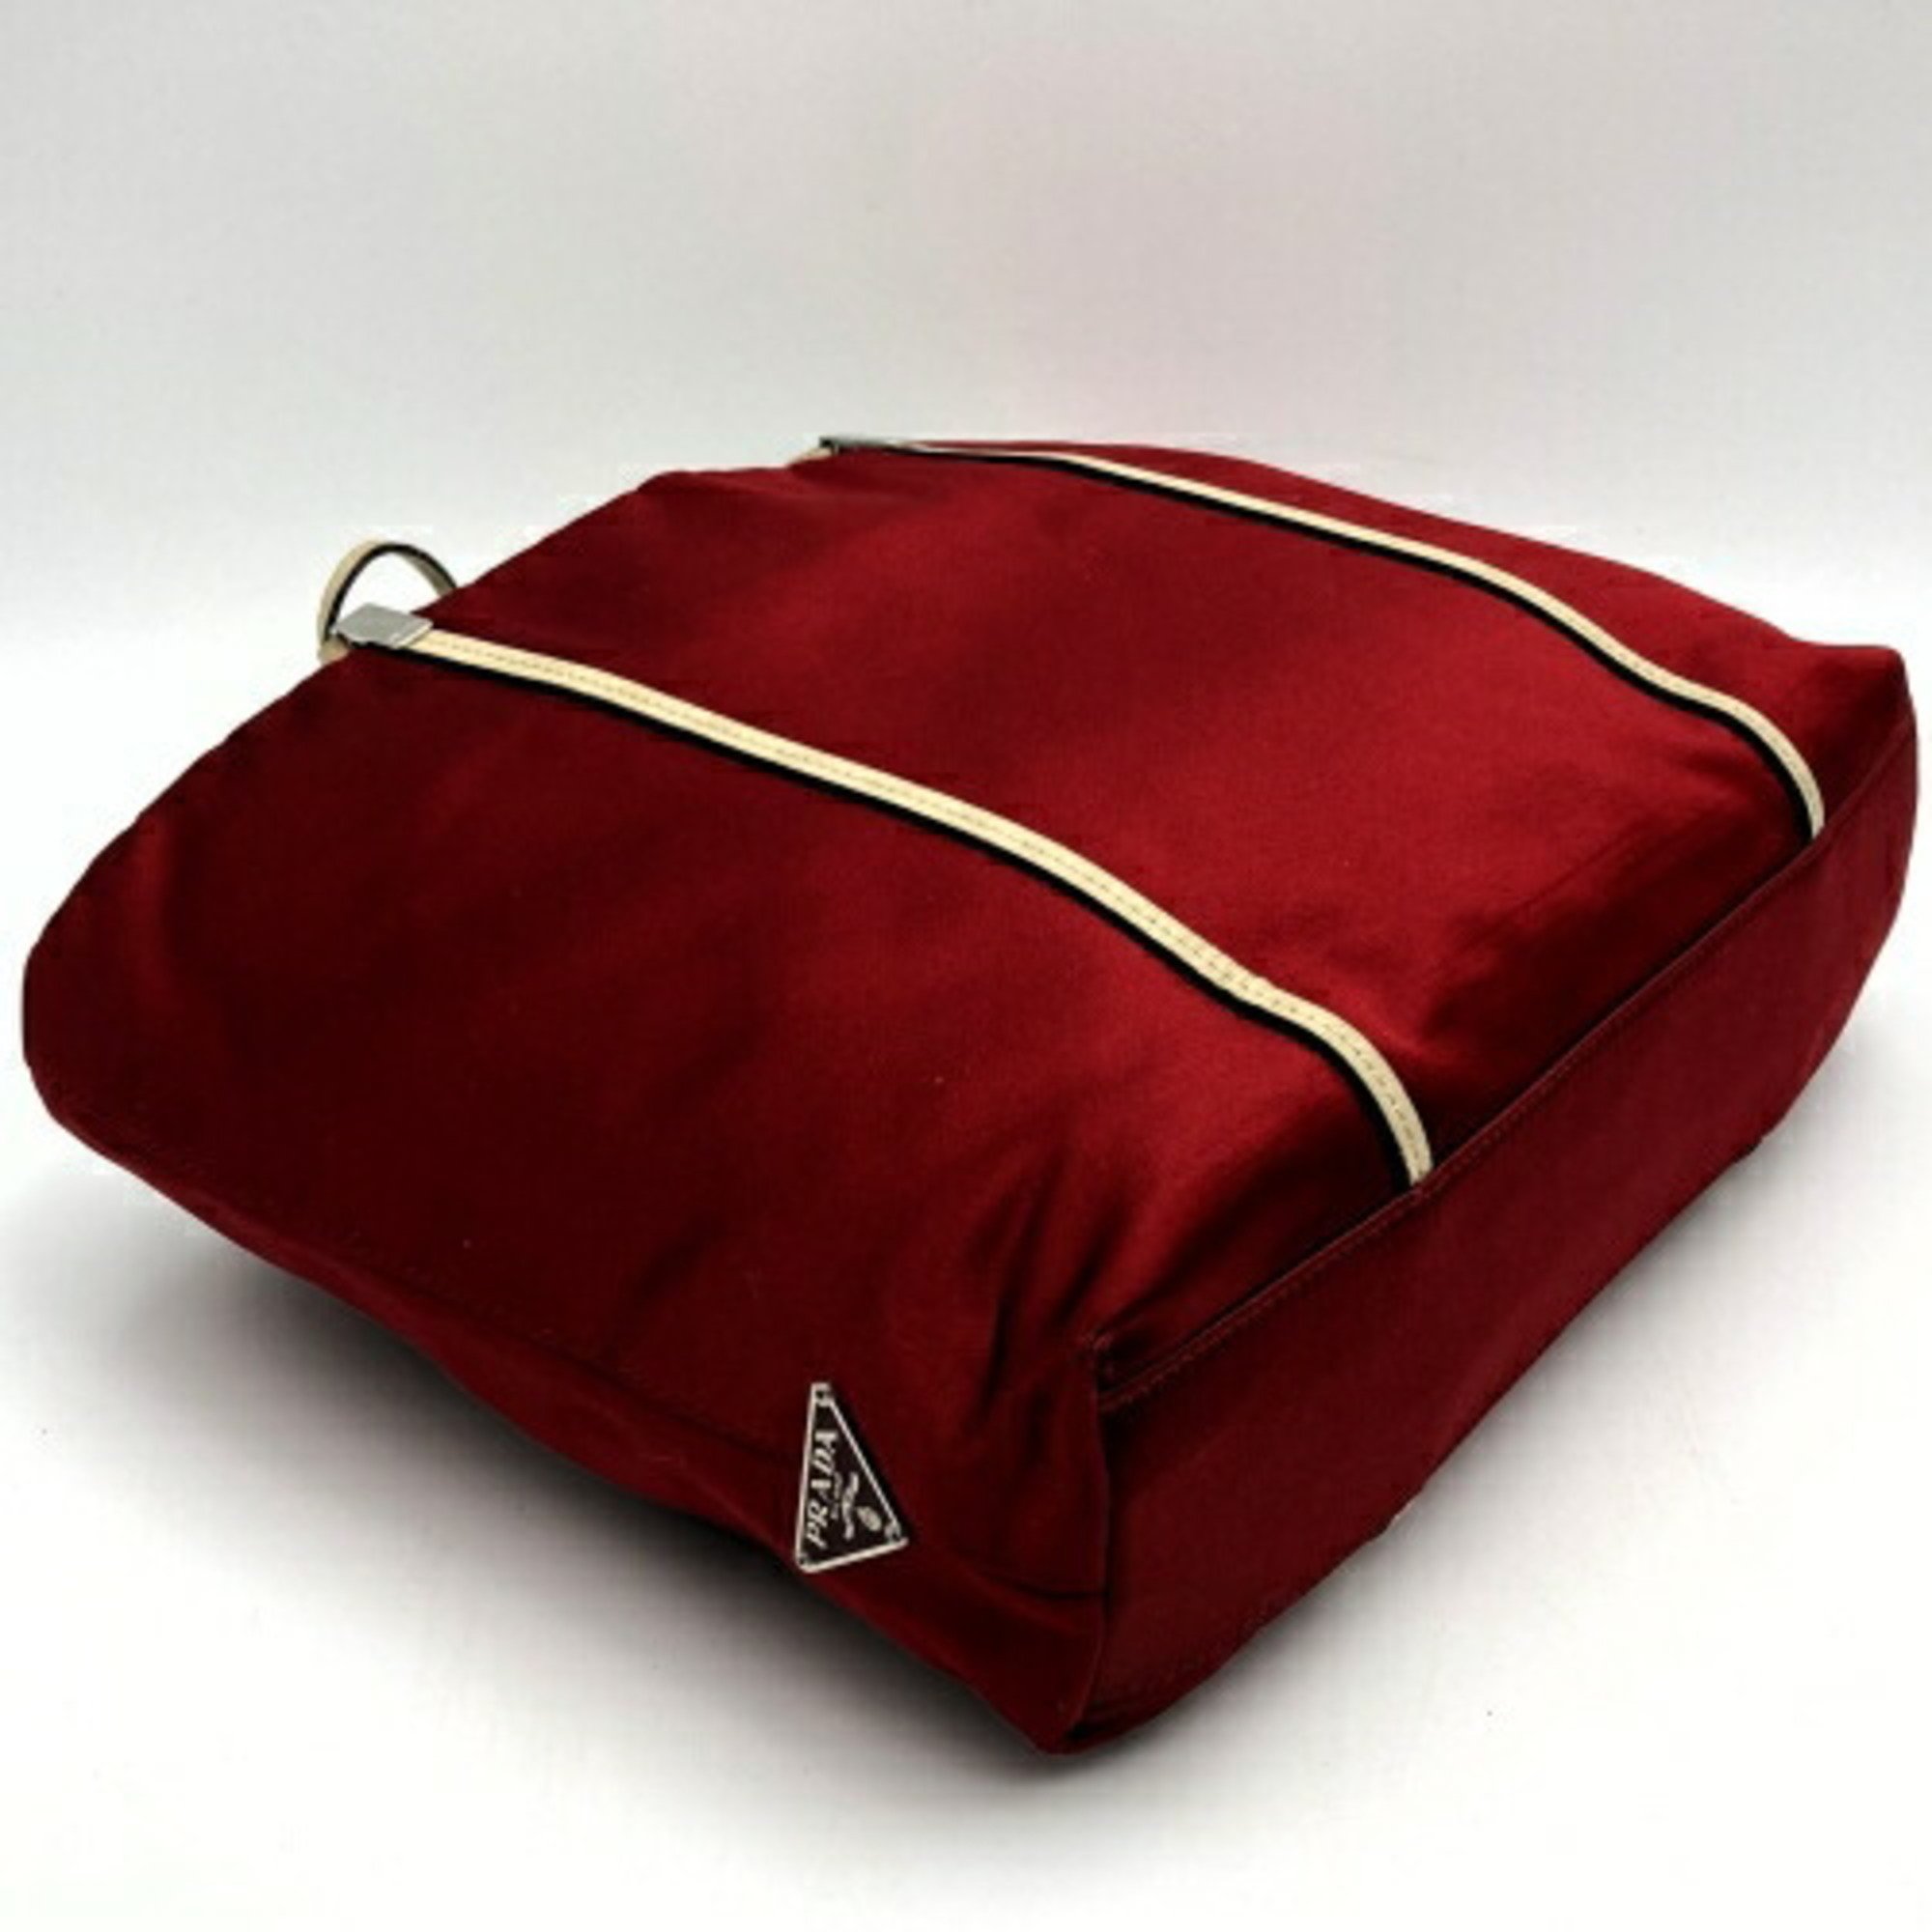 PRADA Prada tote bag handbag triangle red satin ladies fashion ITPYETOYLGSC